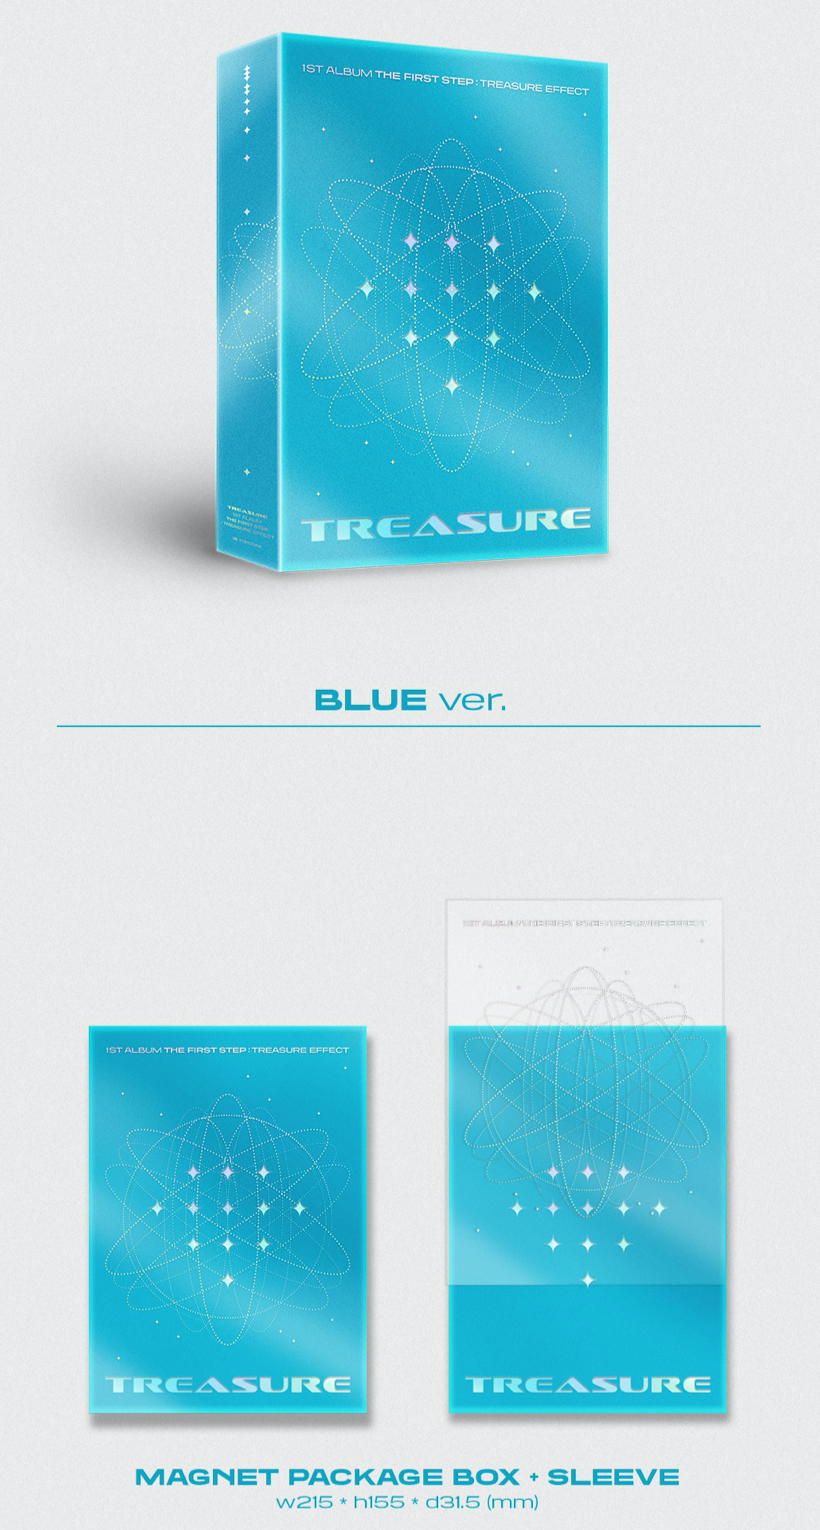 Treasure 1st Album The First Step: Treasure Effect